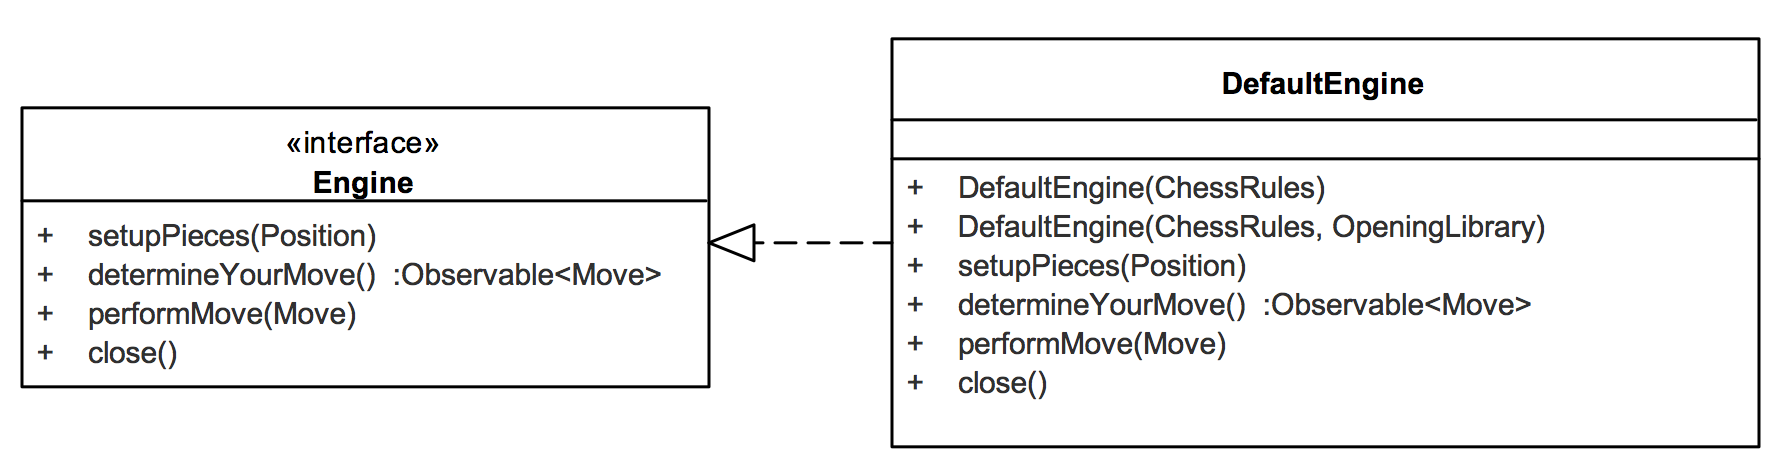 Interface Engine and class DefaultEngine